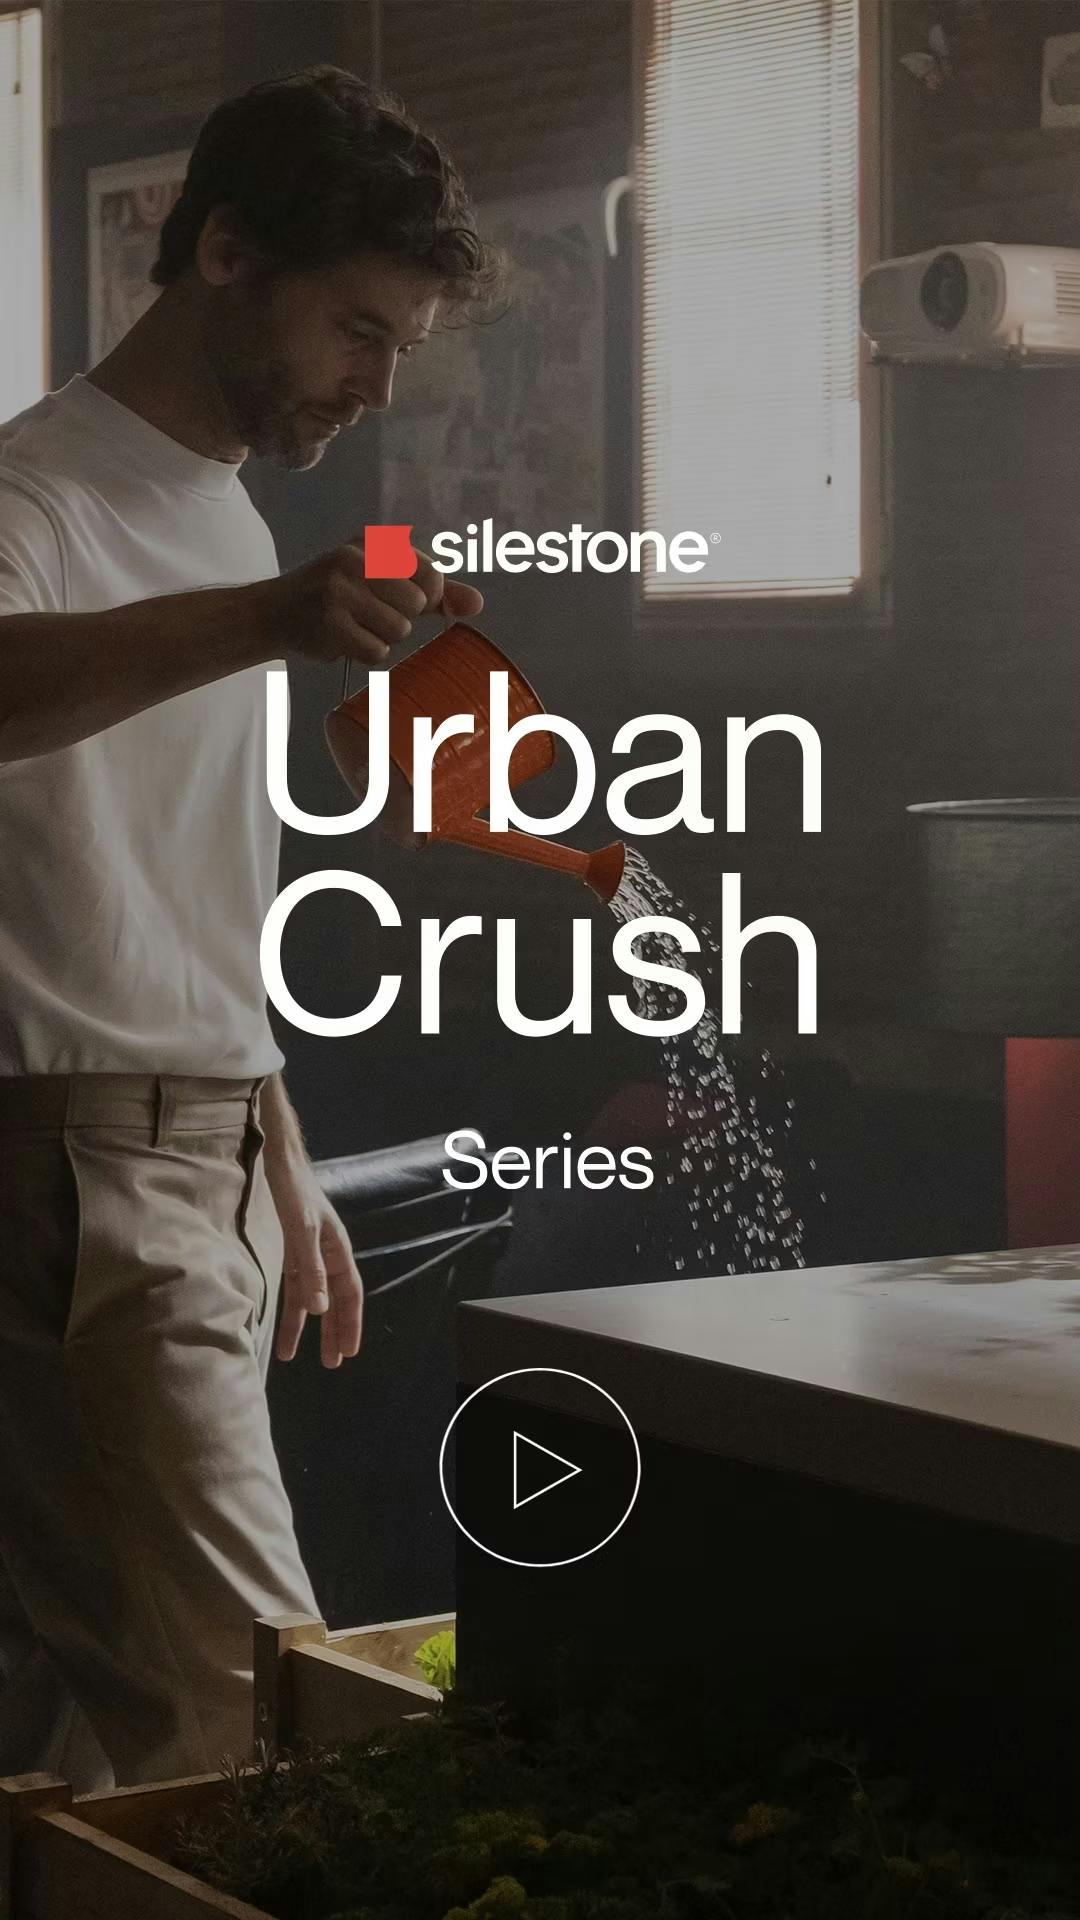 Numéro d'image 34 de la section actuelle de Silestone Urban Crush de Cosentino Canada